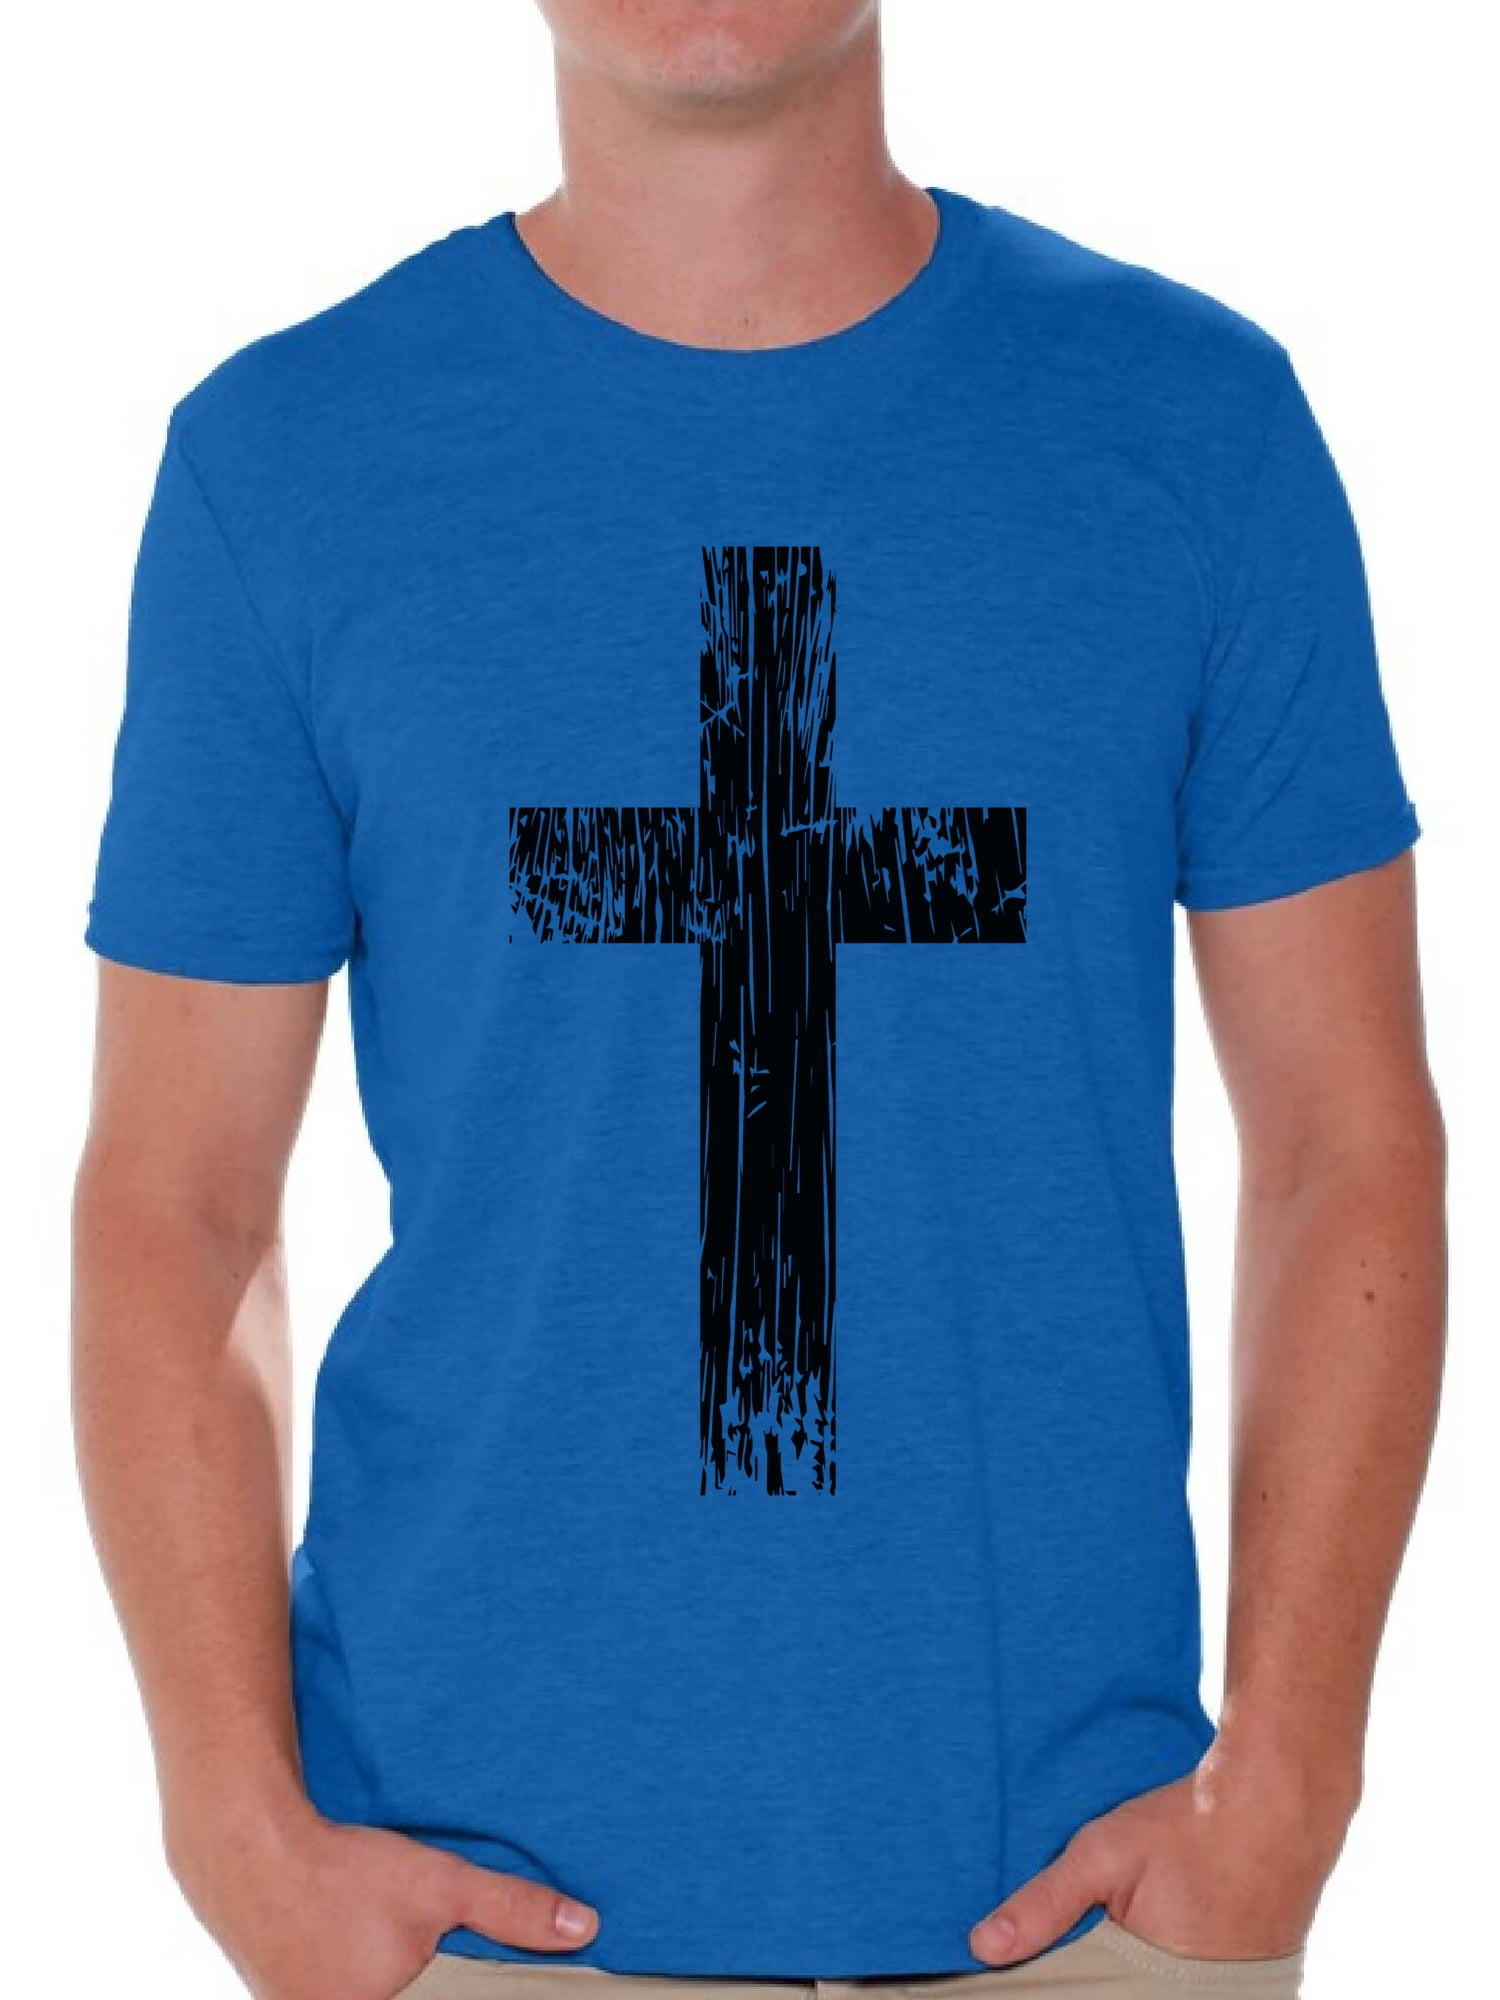 Awkward Styles Black Cross T Shirt for Him Christian Mens Shirts ...